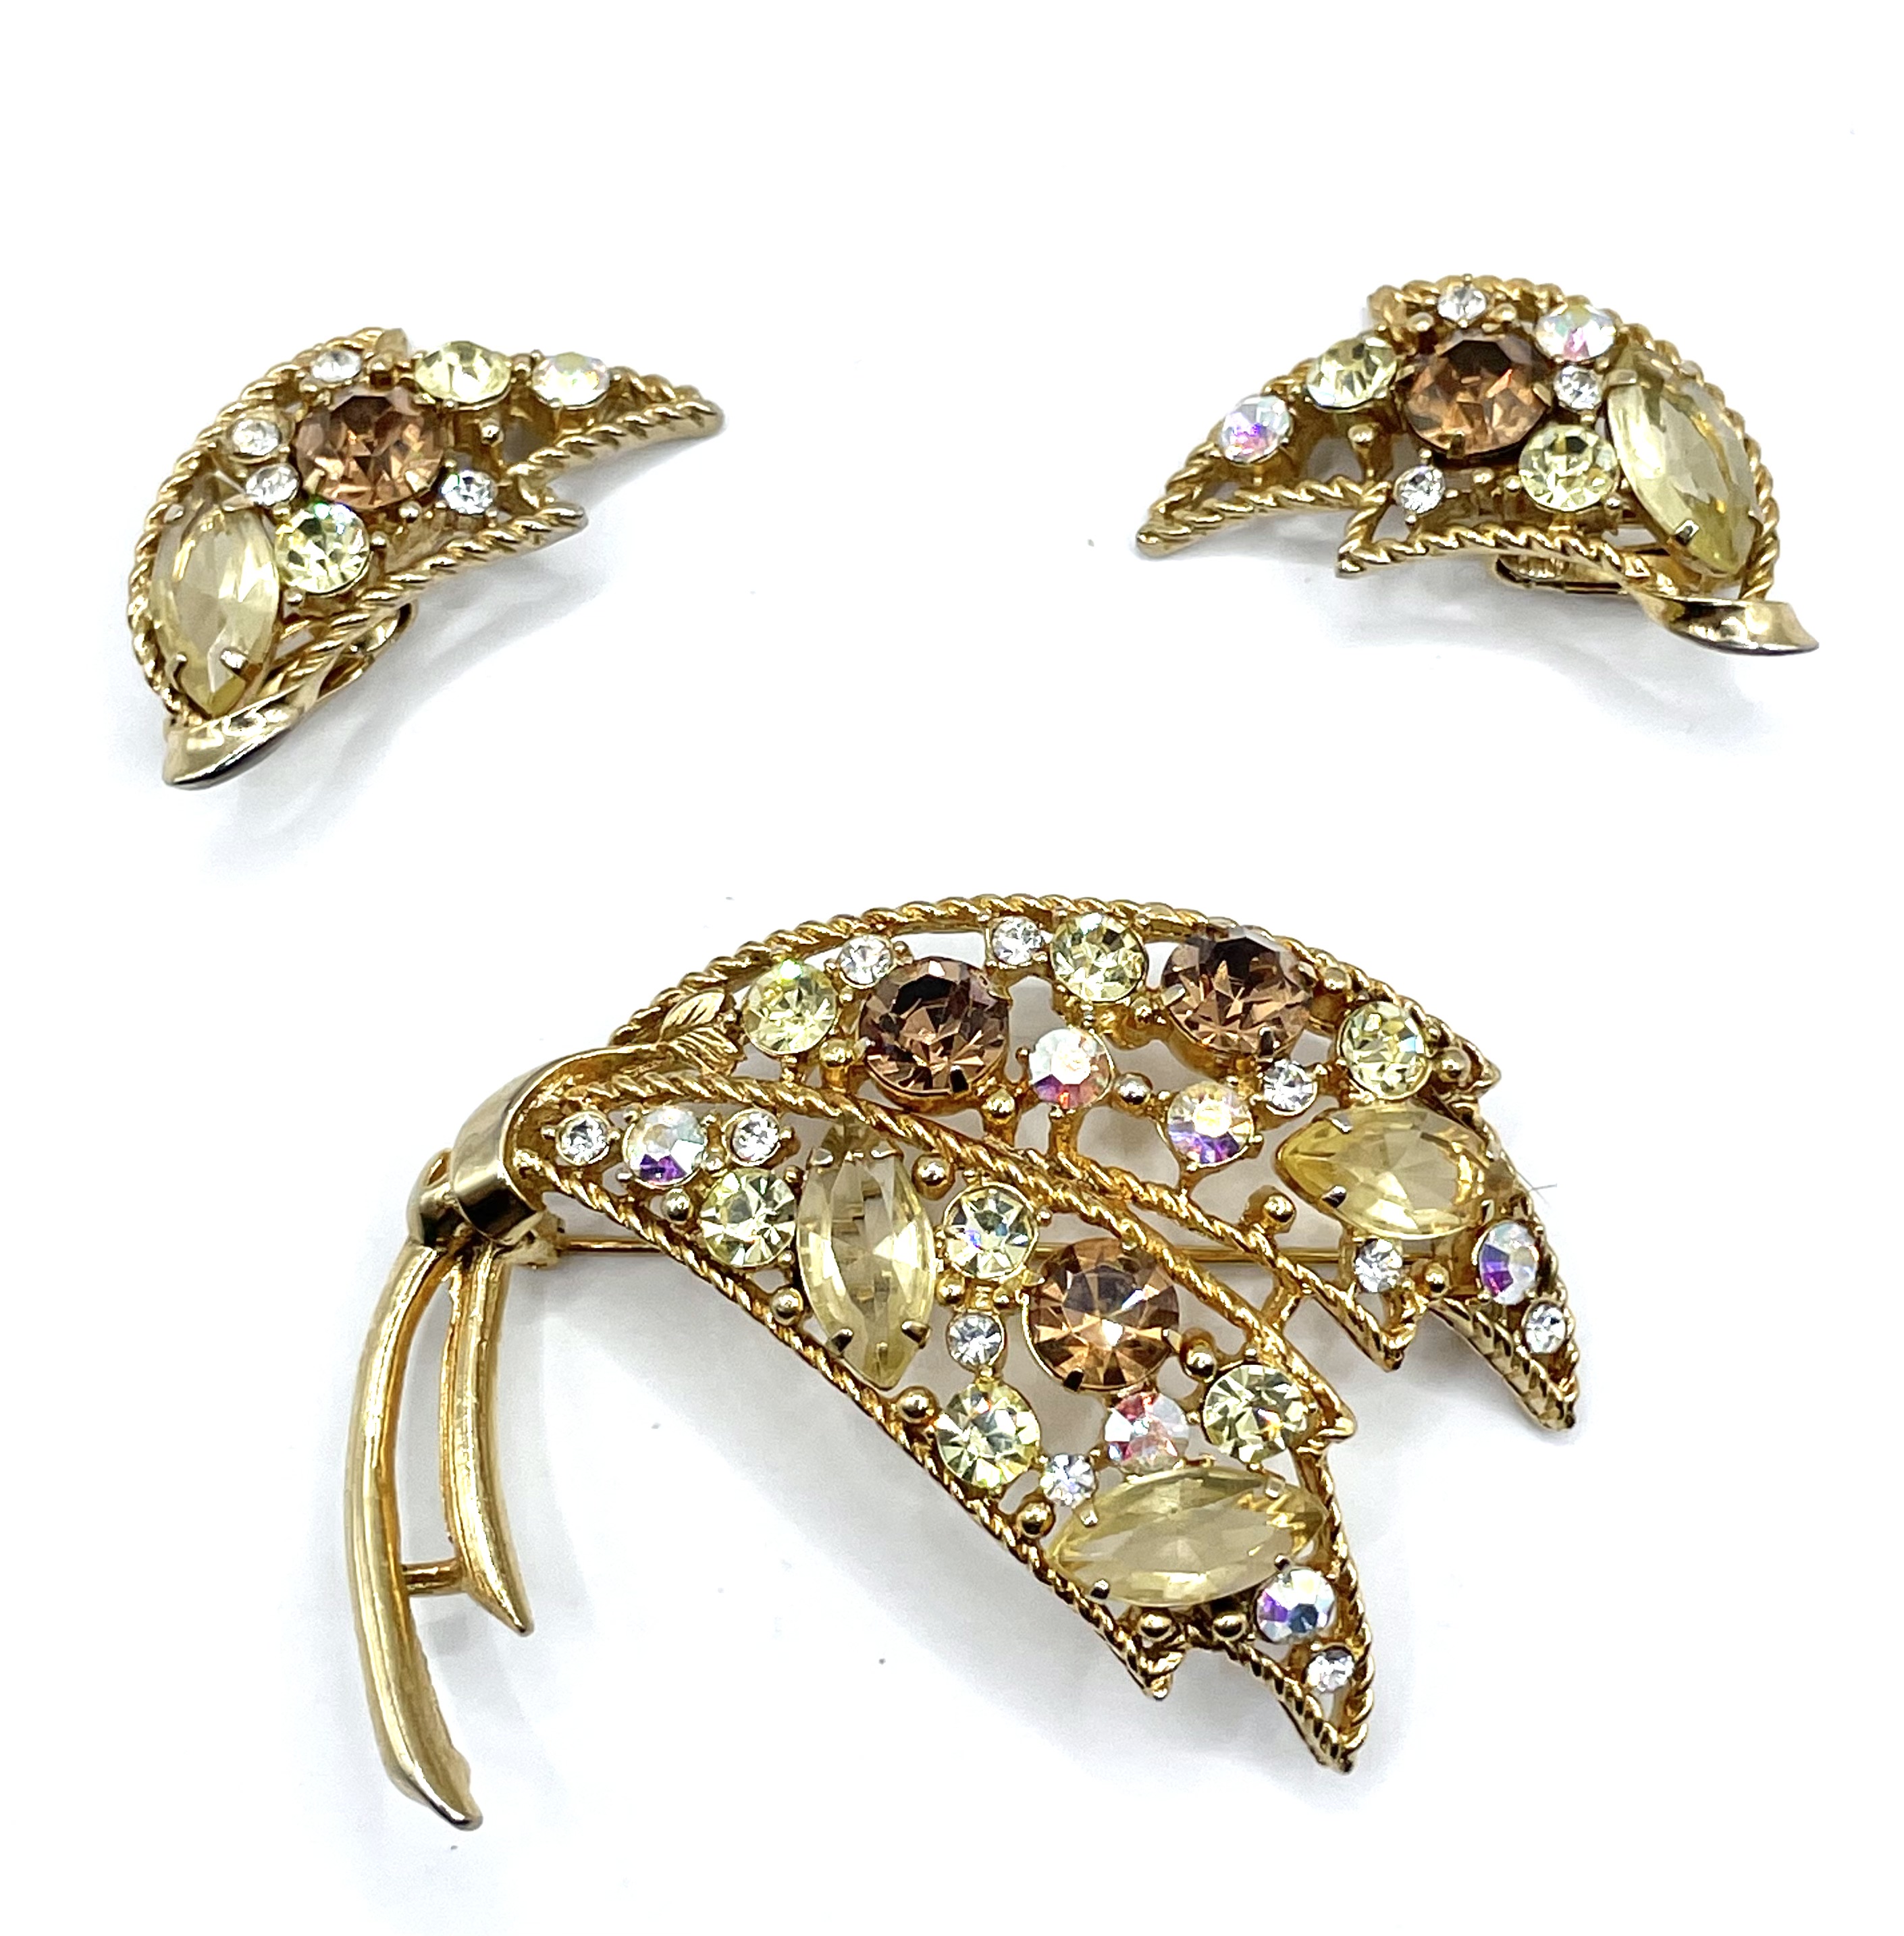 Emmons rhinestone brooch and earring set